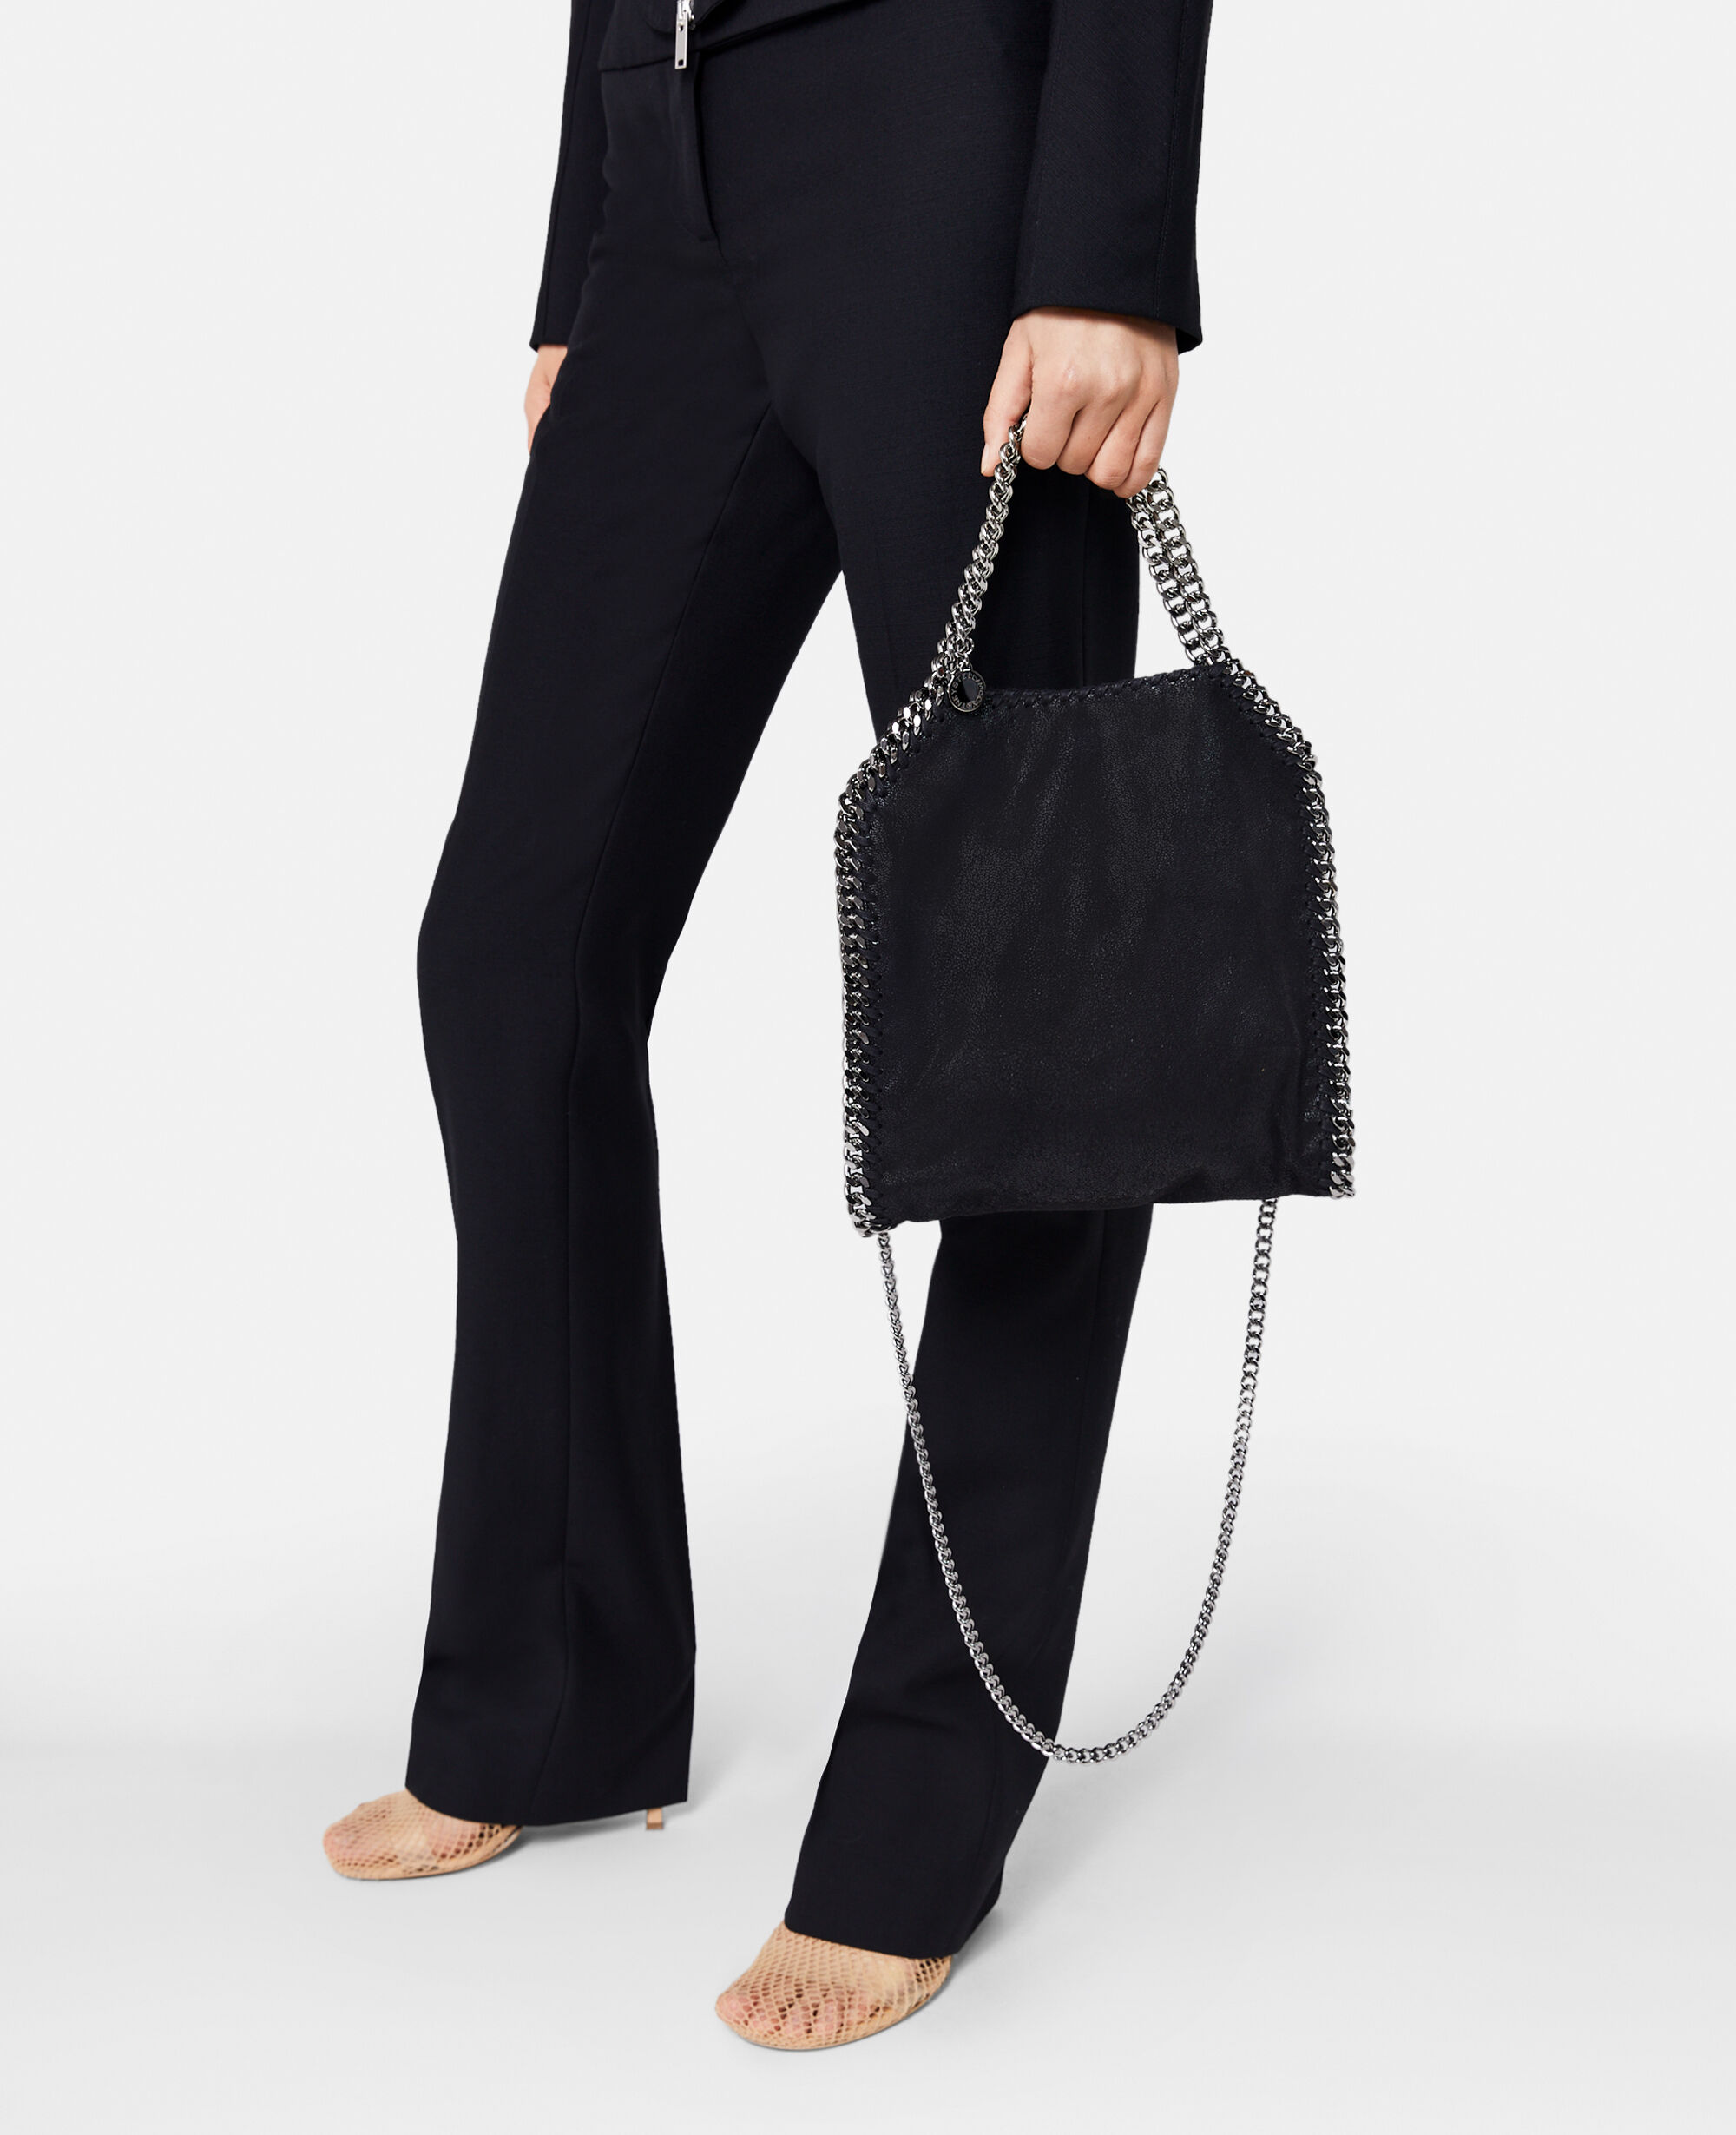 Stella McCartney Falabella Three Chain Tote Bag Natural Beige | eBay